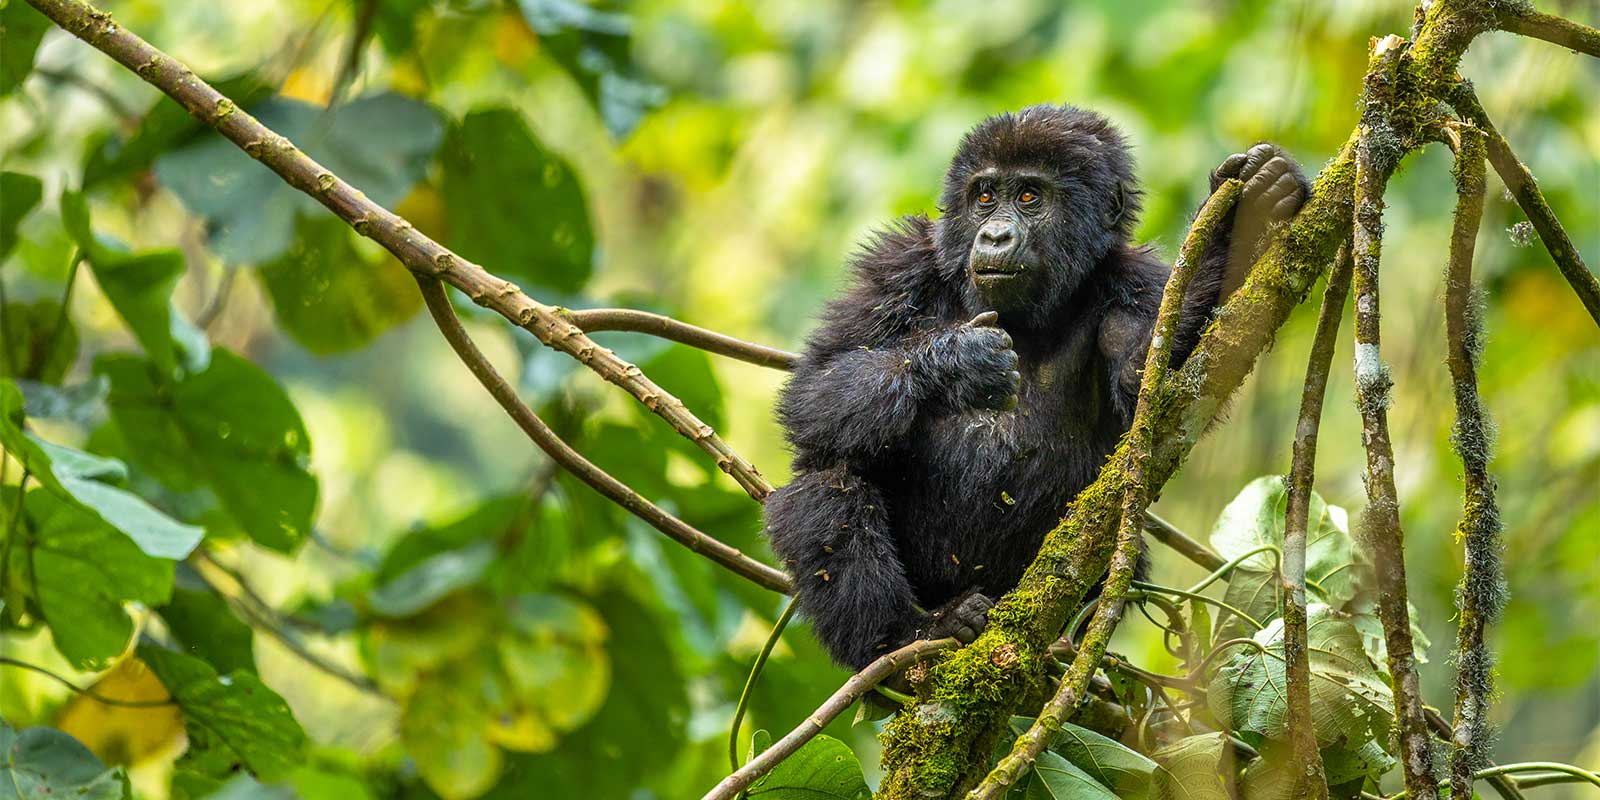 Juvenile mountain gorilla in Bwindi Impenetrable Forest National Park in Uganda